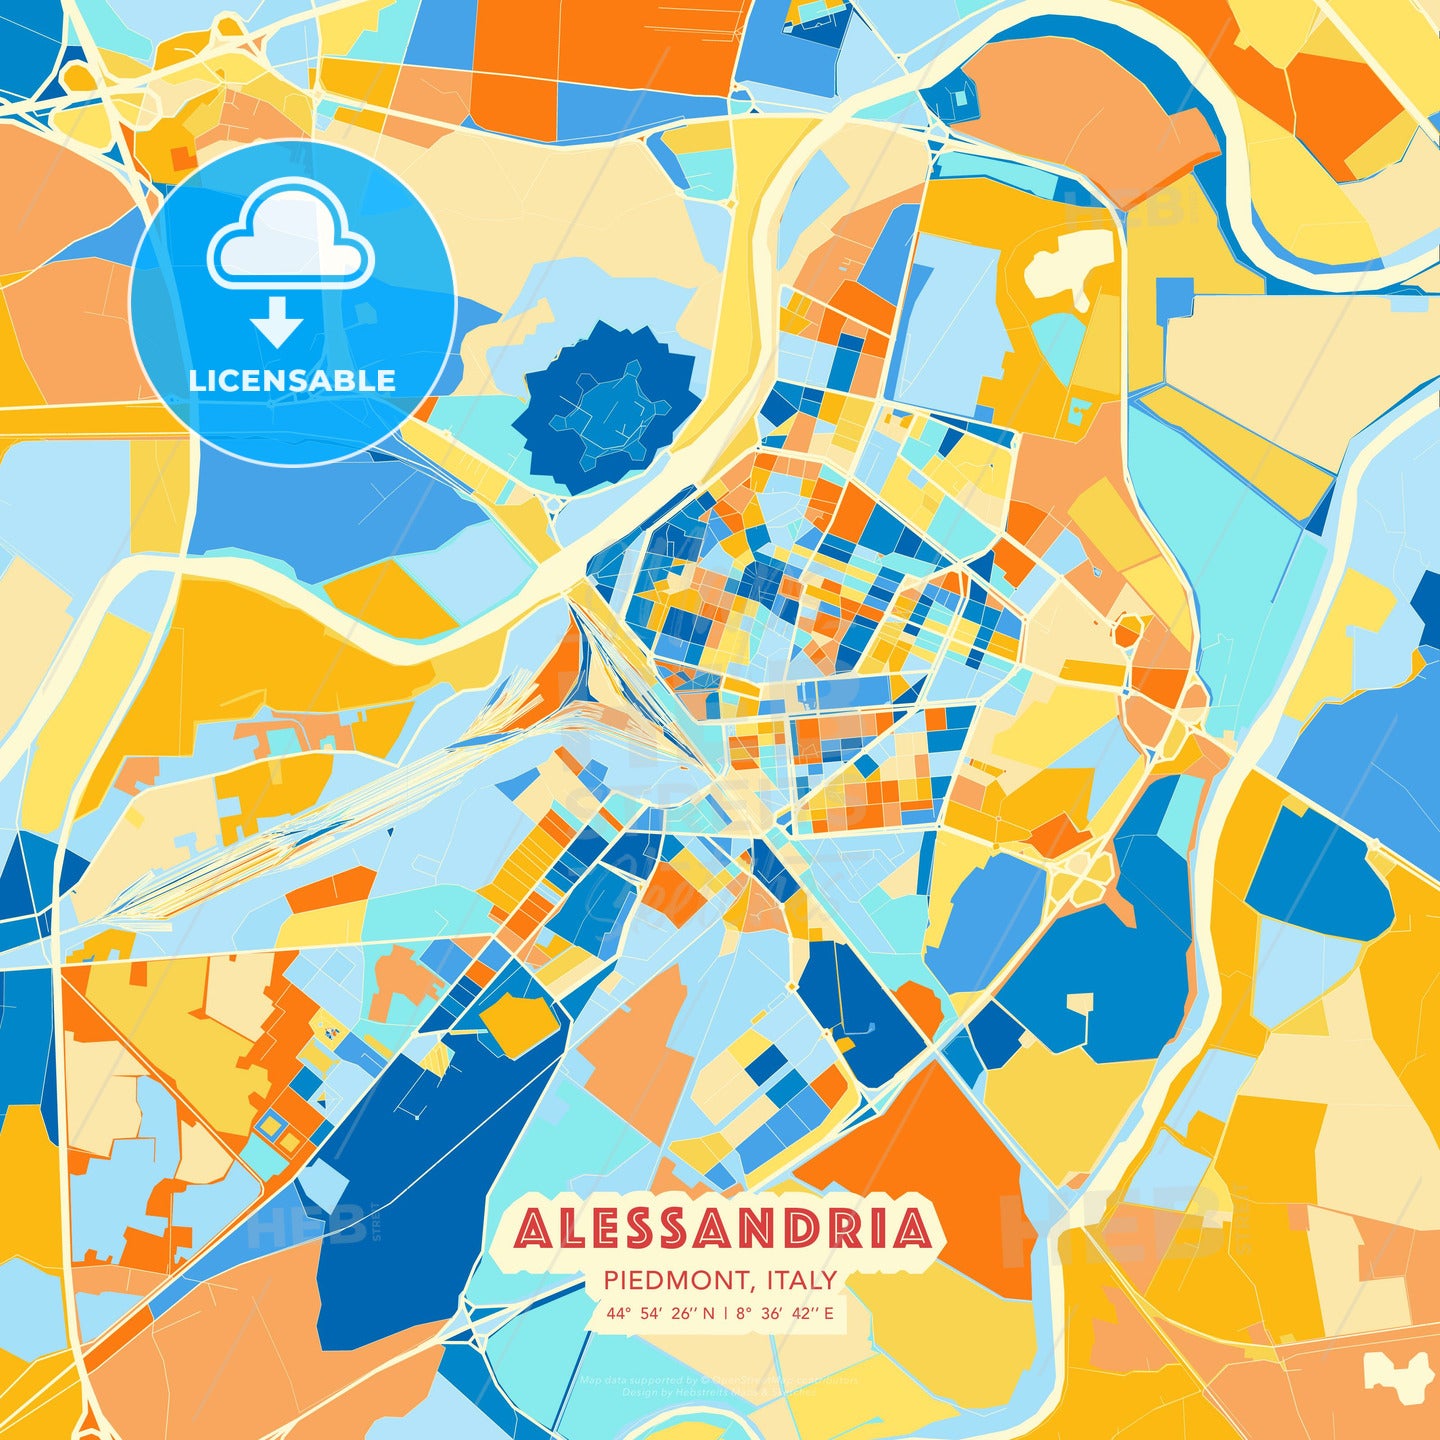 Alessandria, Piedmont, Italy, map - HEBSTREITS Sketches